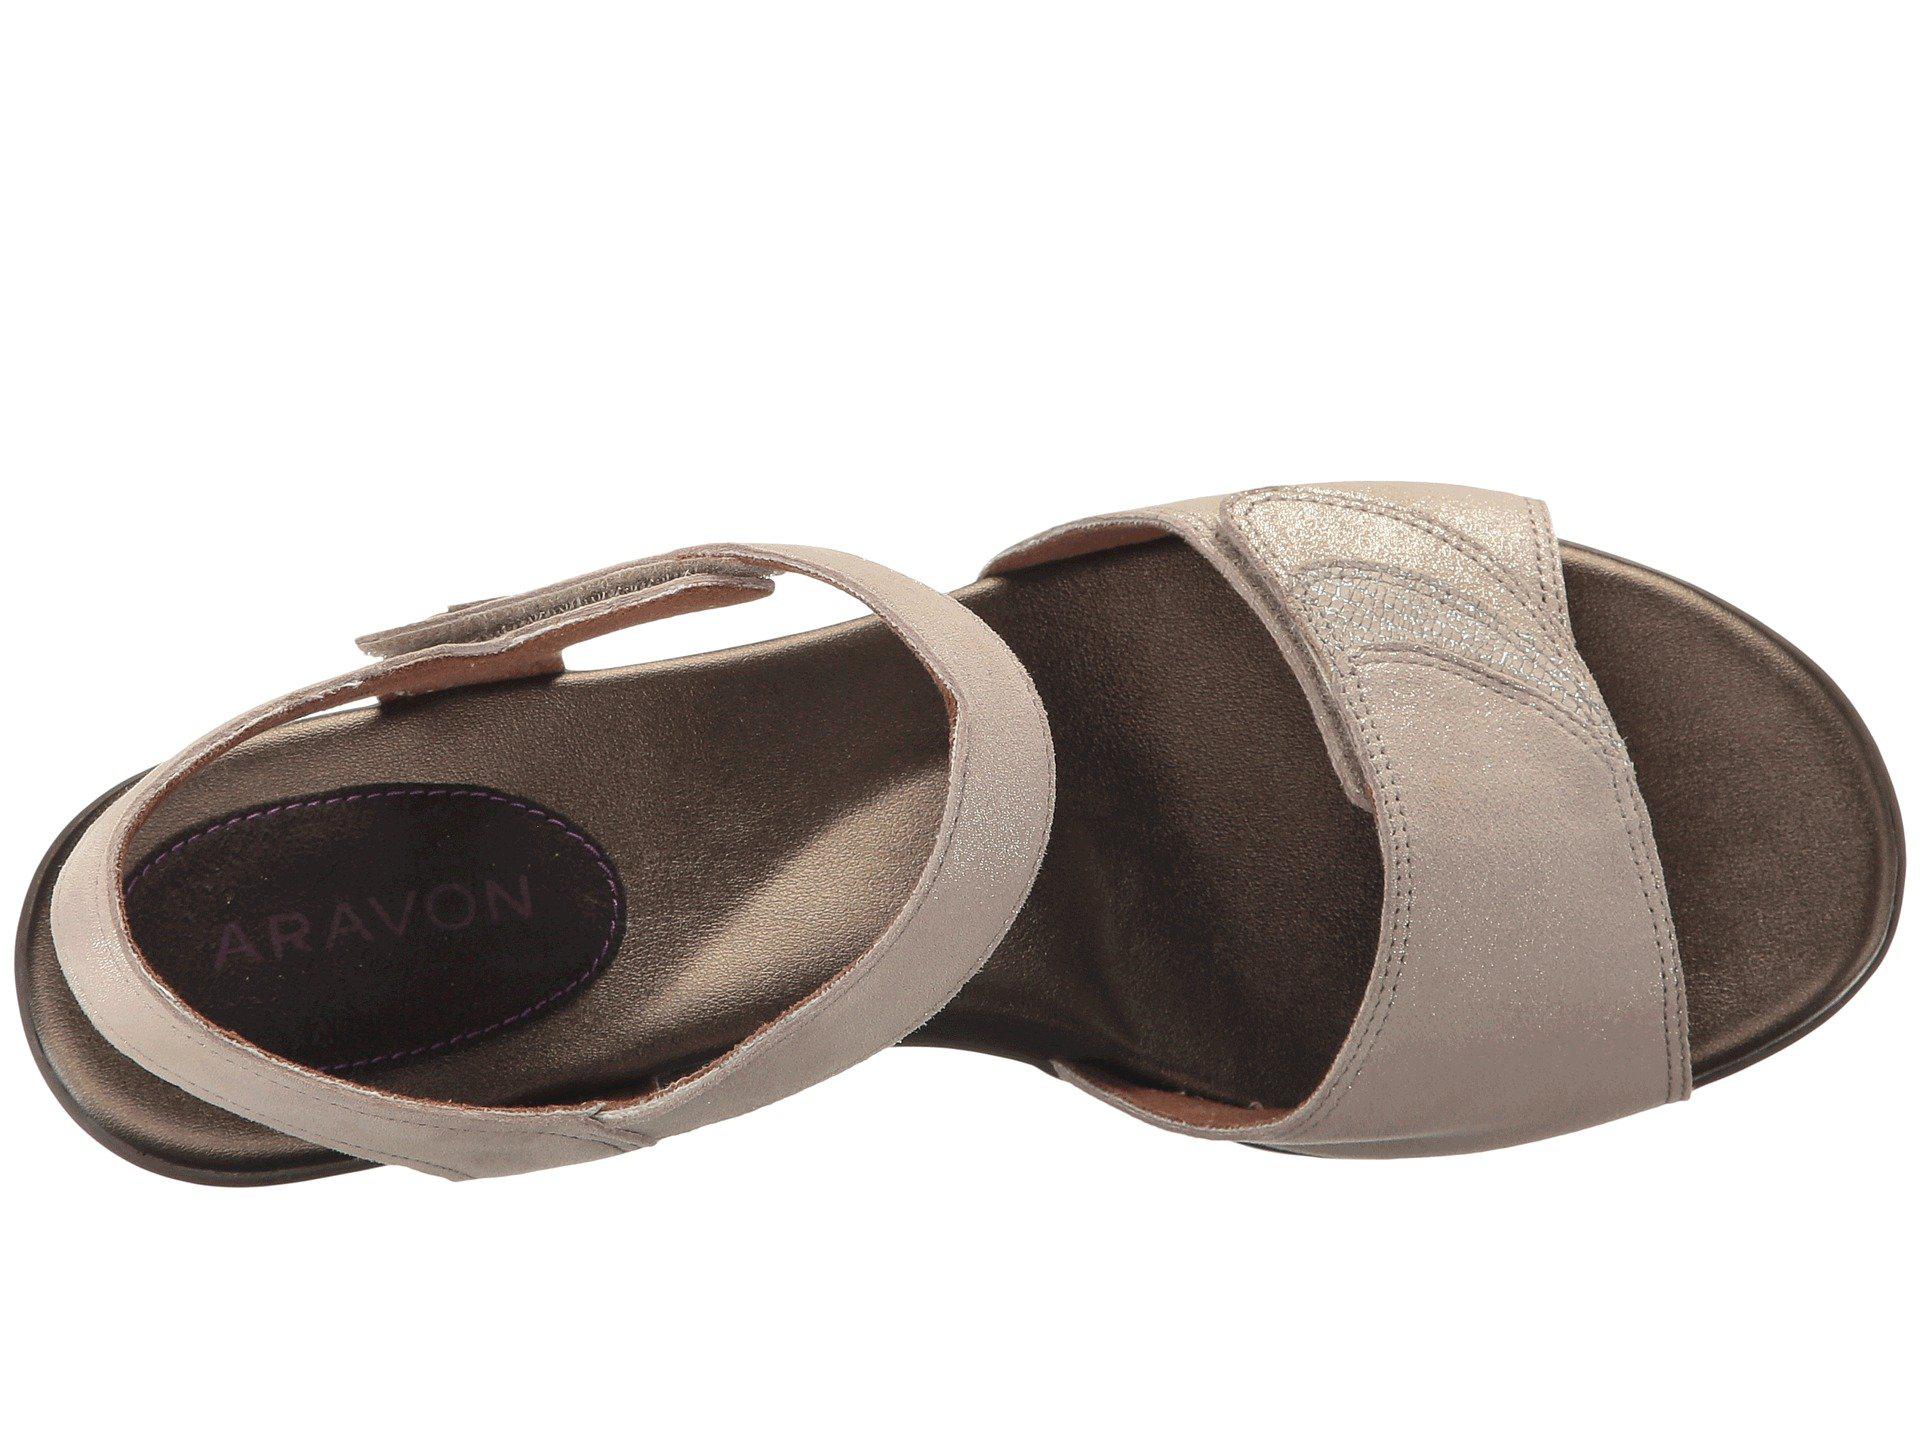 Aravon Leather Medici Sandal in Metallic - Lyst